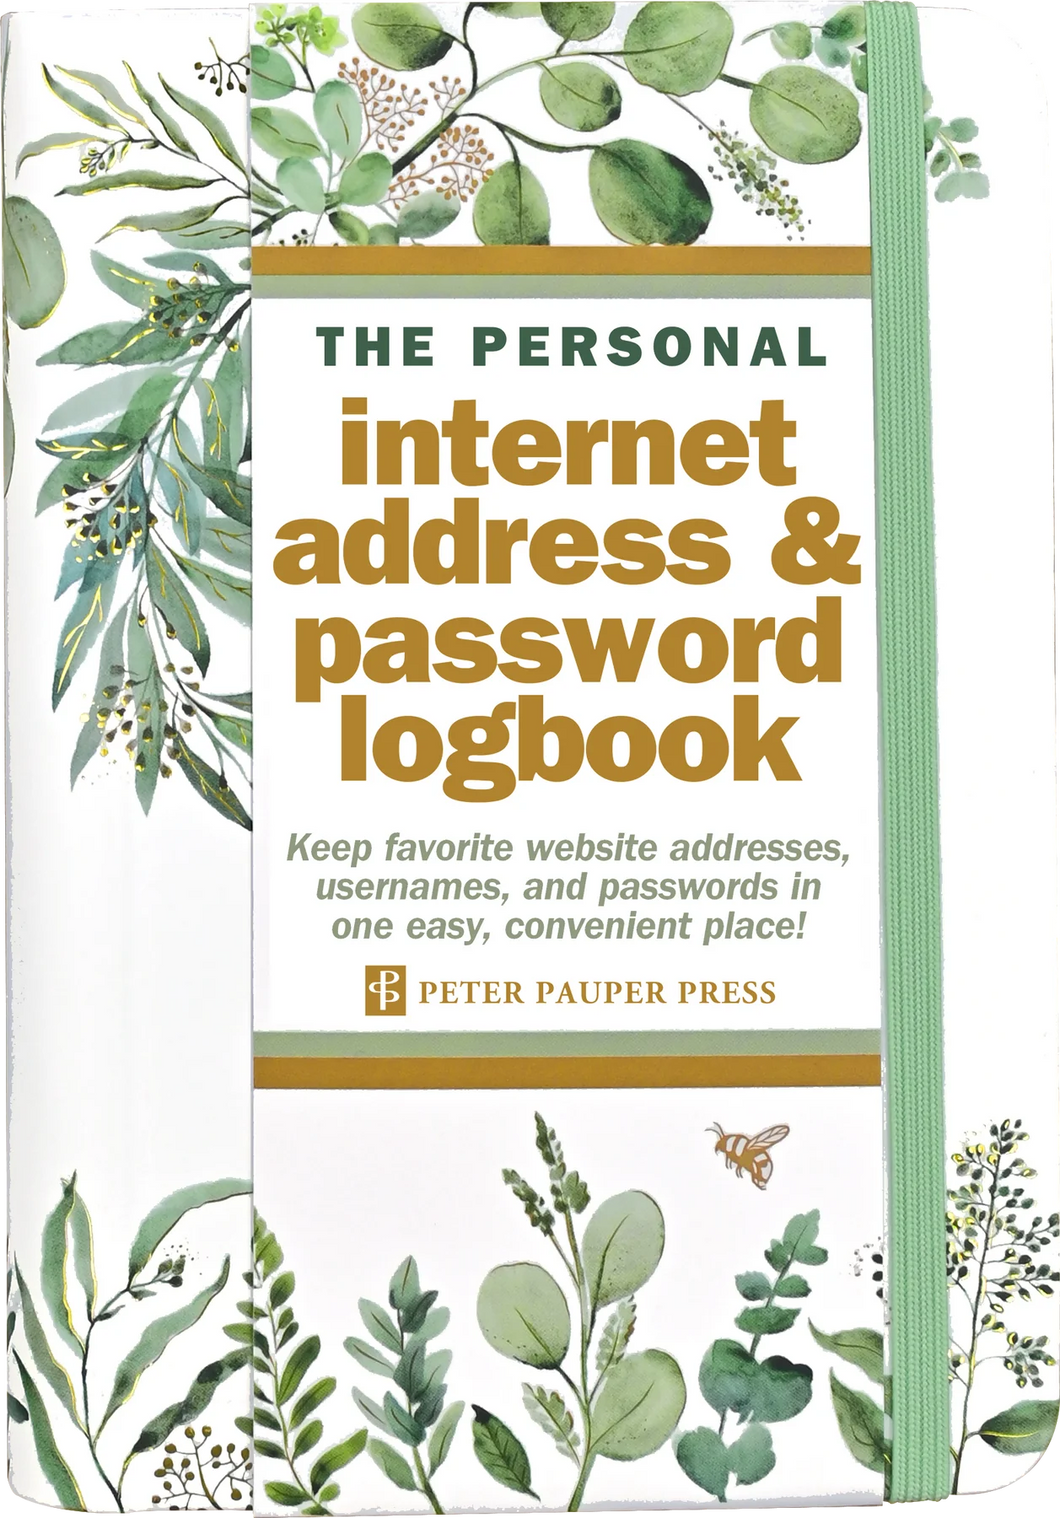 Peter Pauper Press Ecualyptus Internet Address & Password Logbook